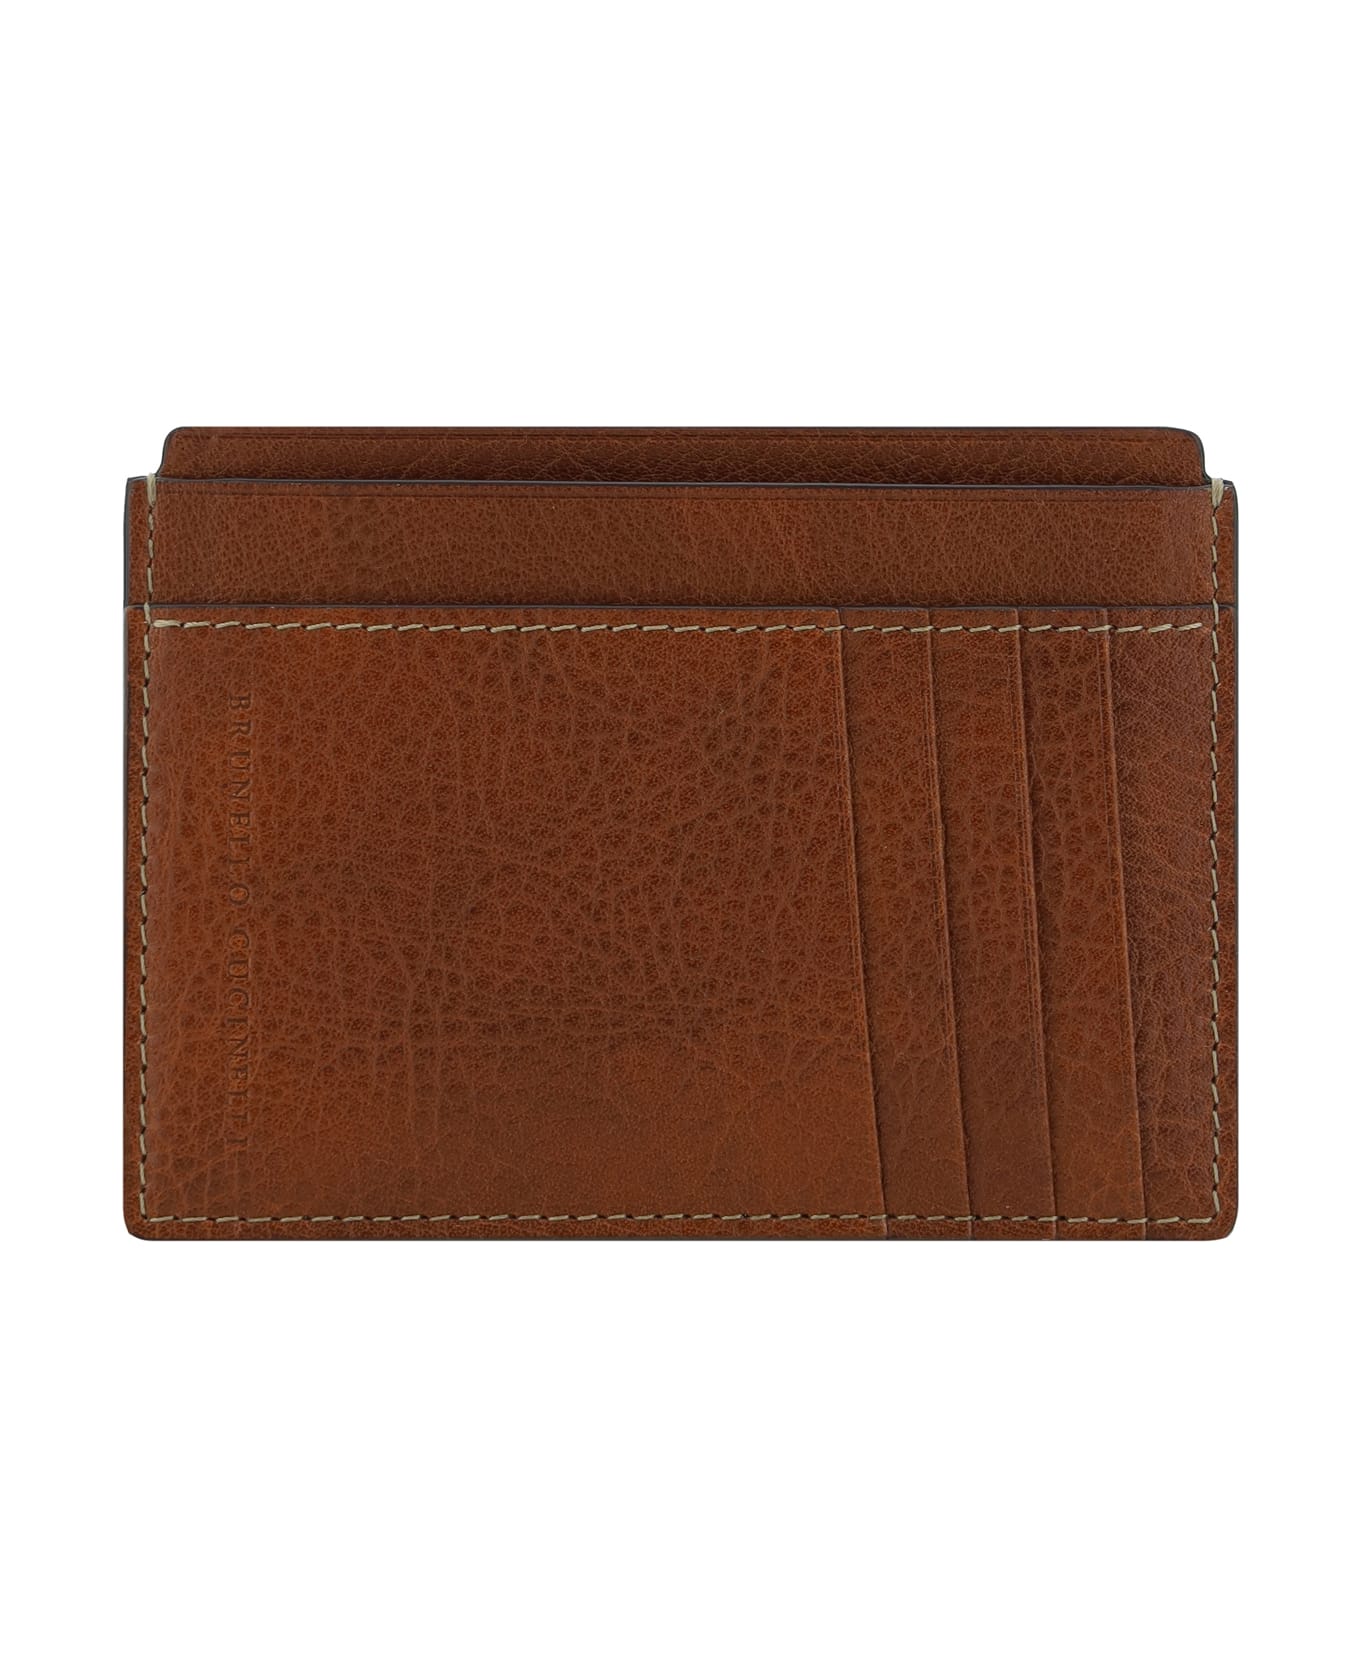 Brunello Cucinelli Leather Card Holder - Bronzo